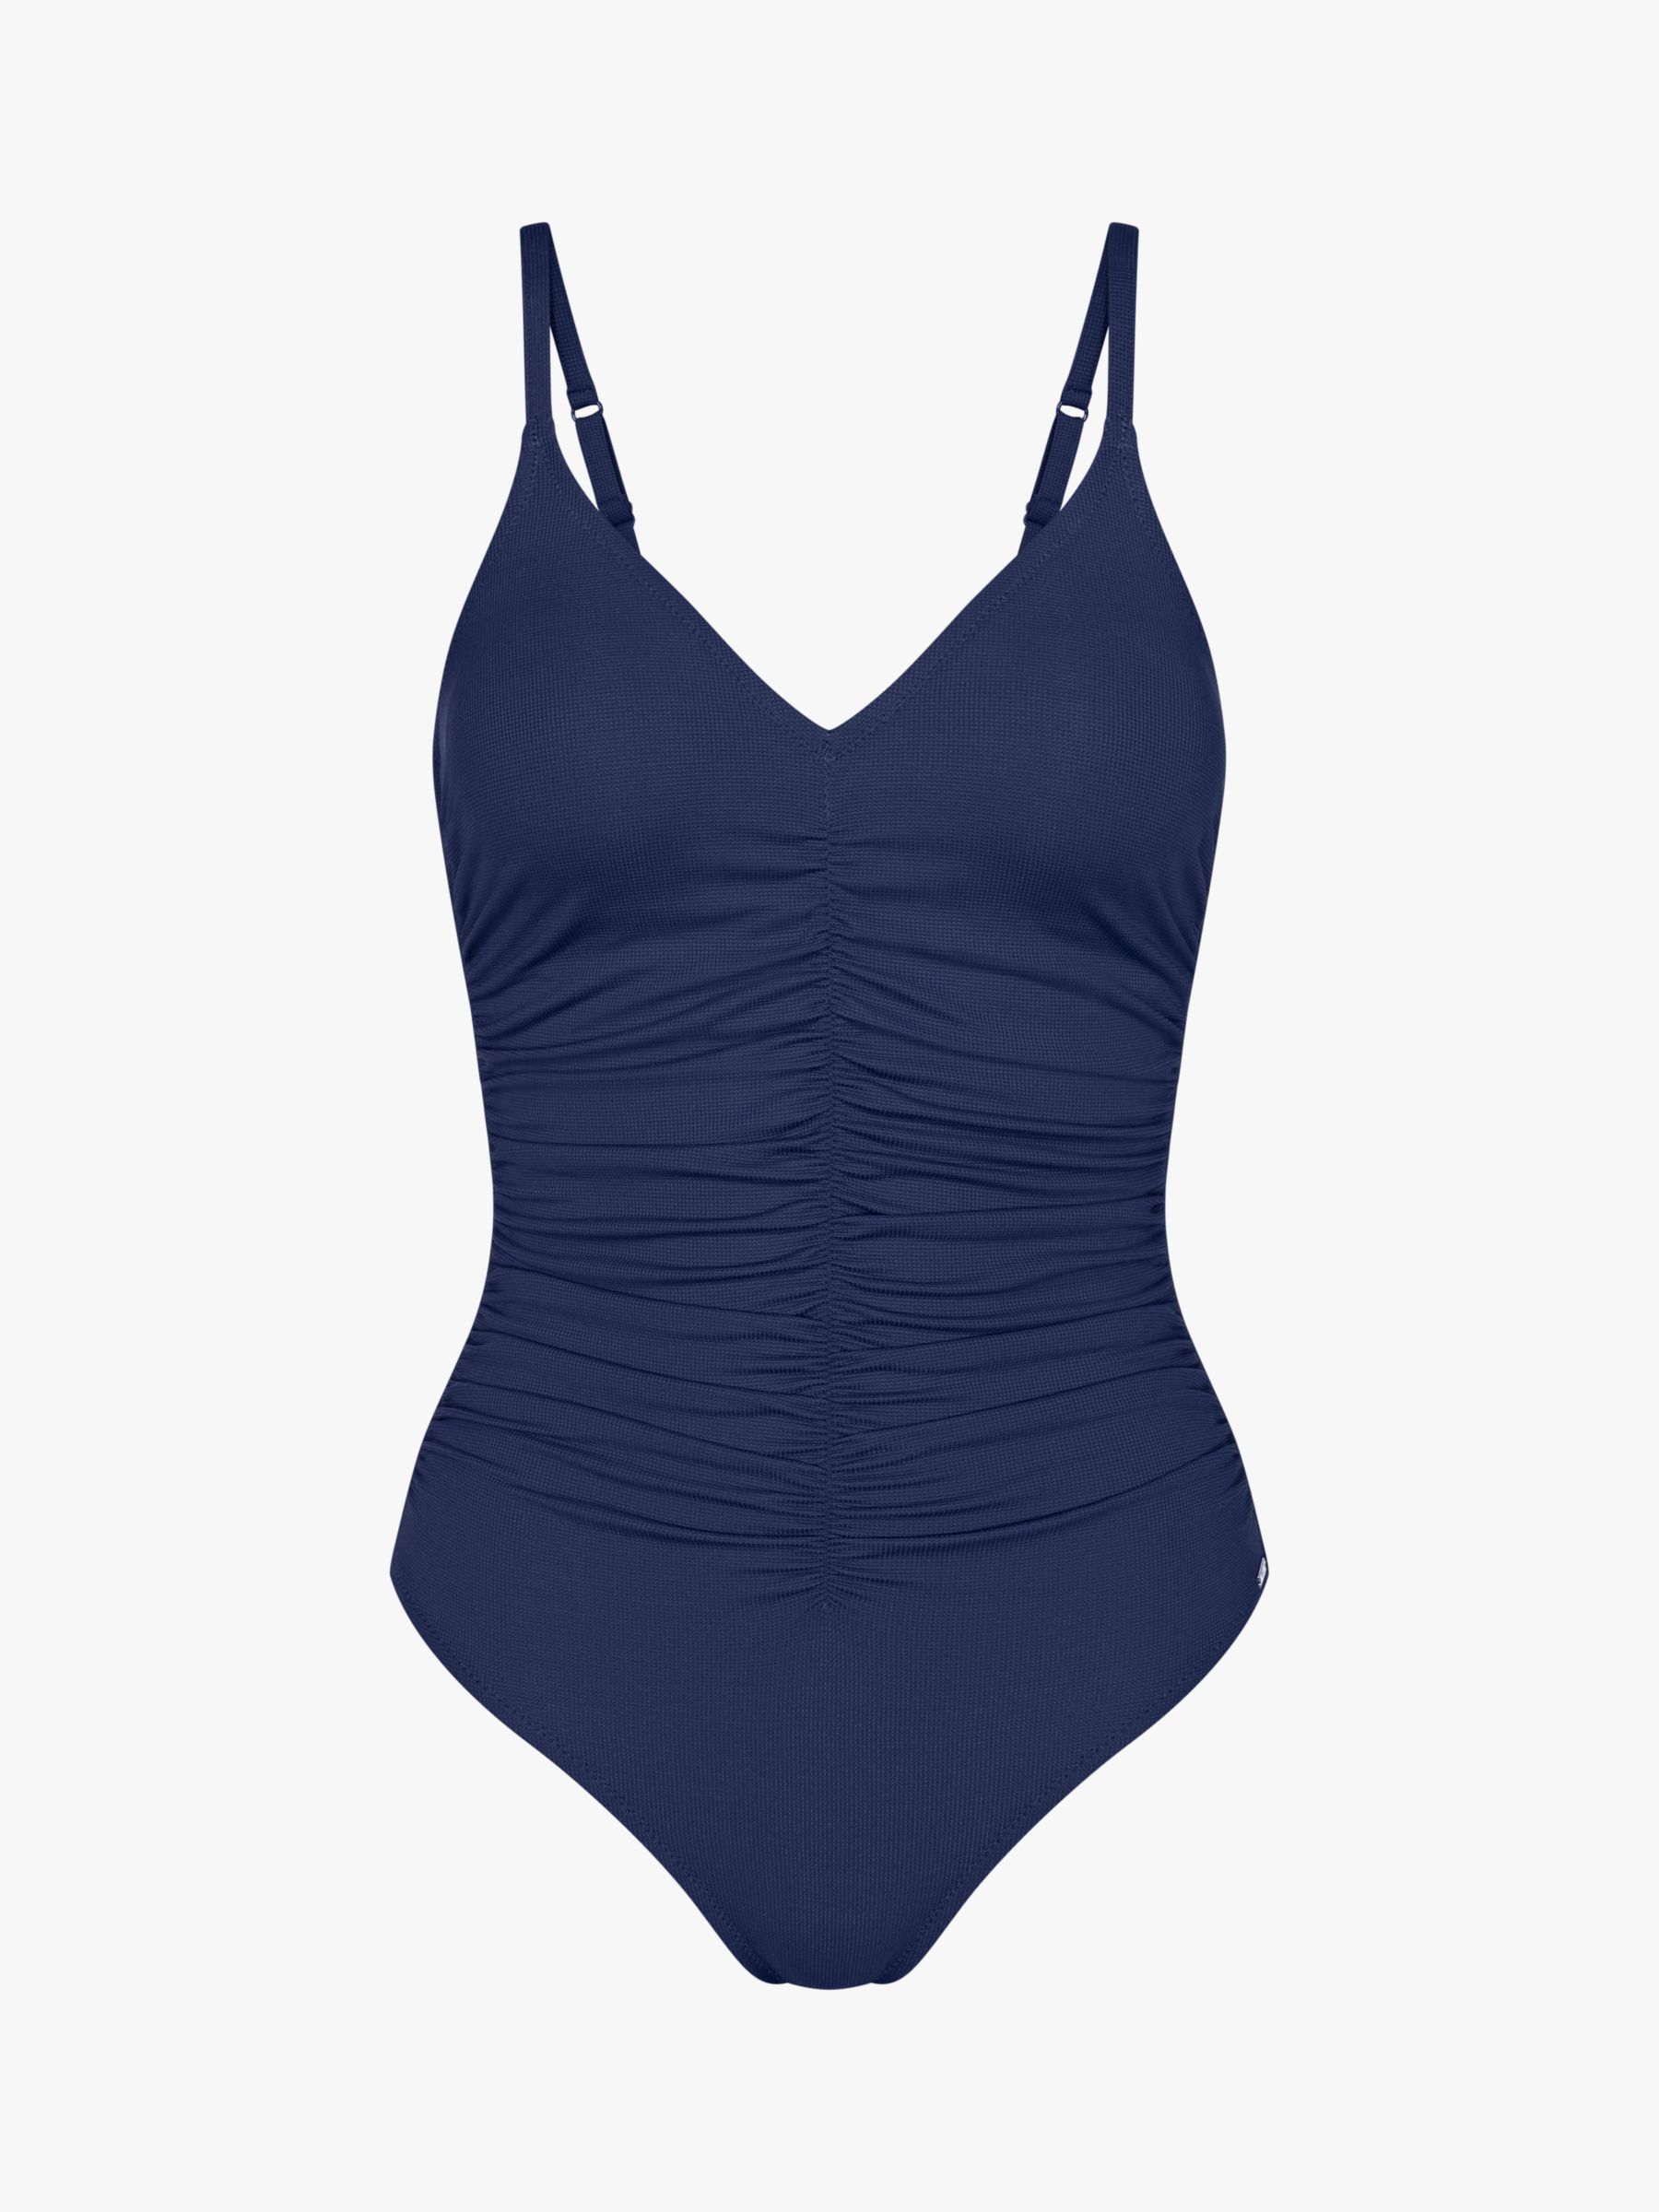 Triumph Summer Glow Padded Swimsuit, True Navy, True Navy, 34B